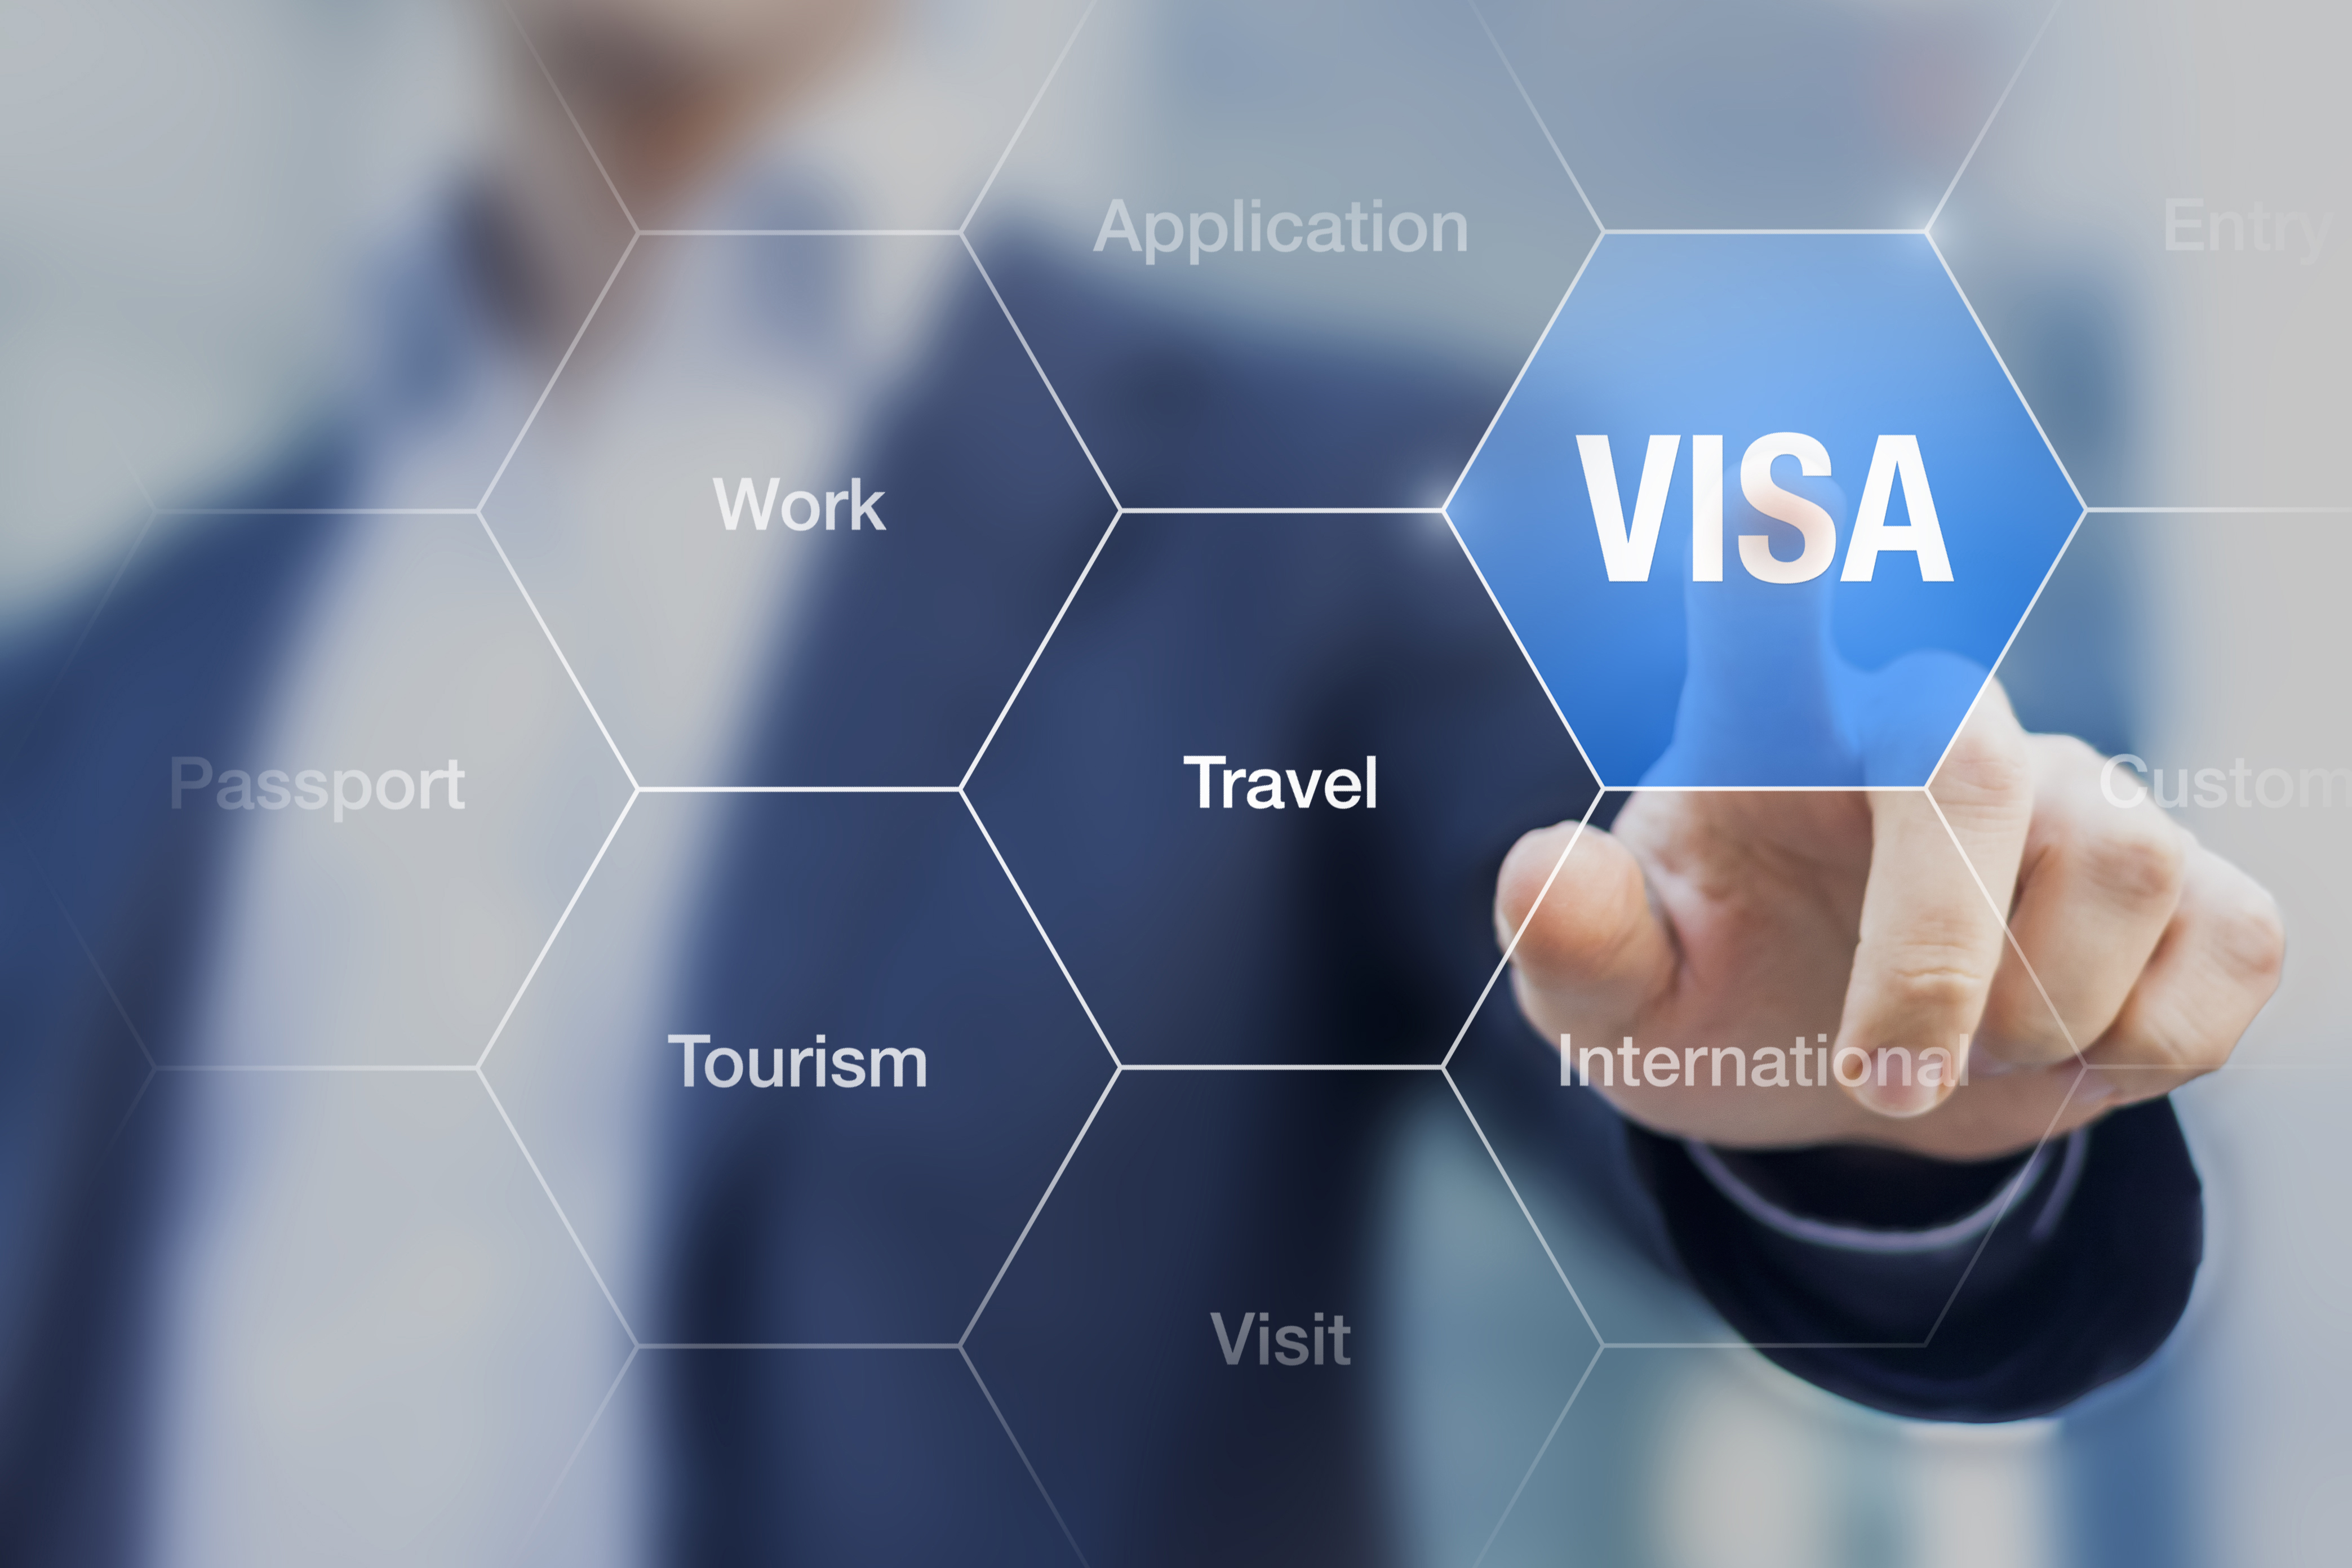 Types of visas